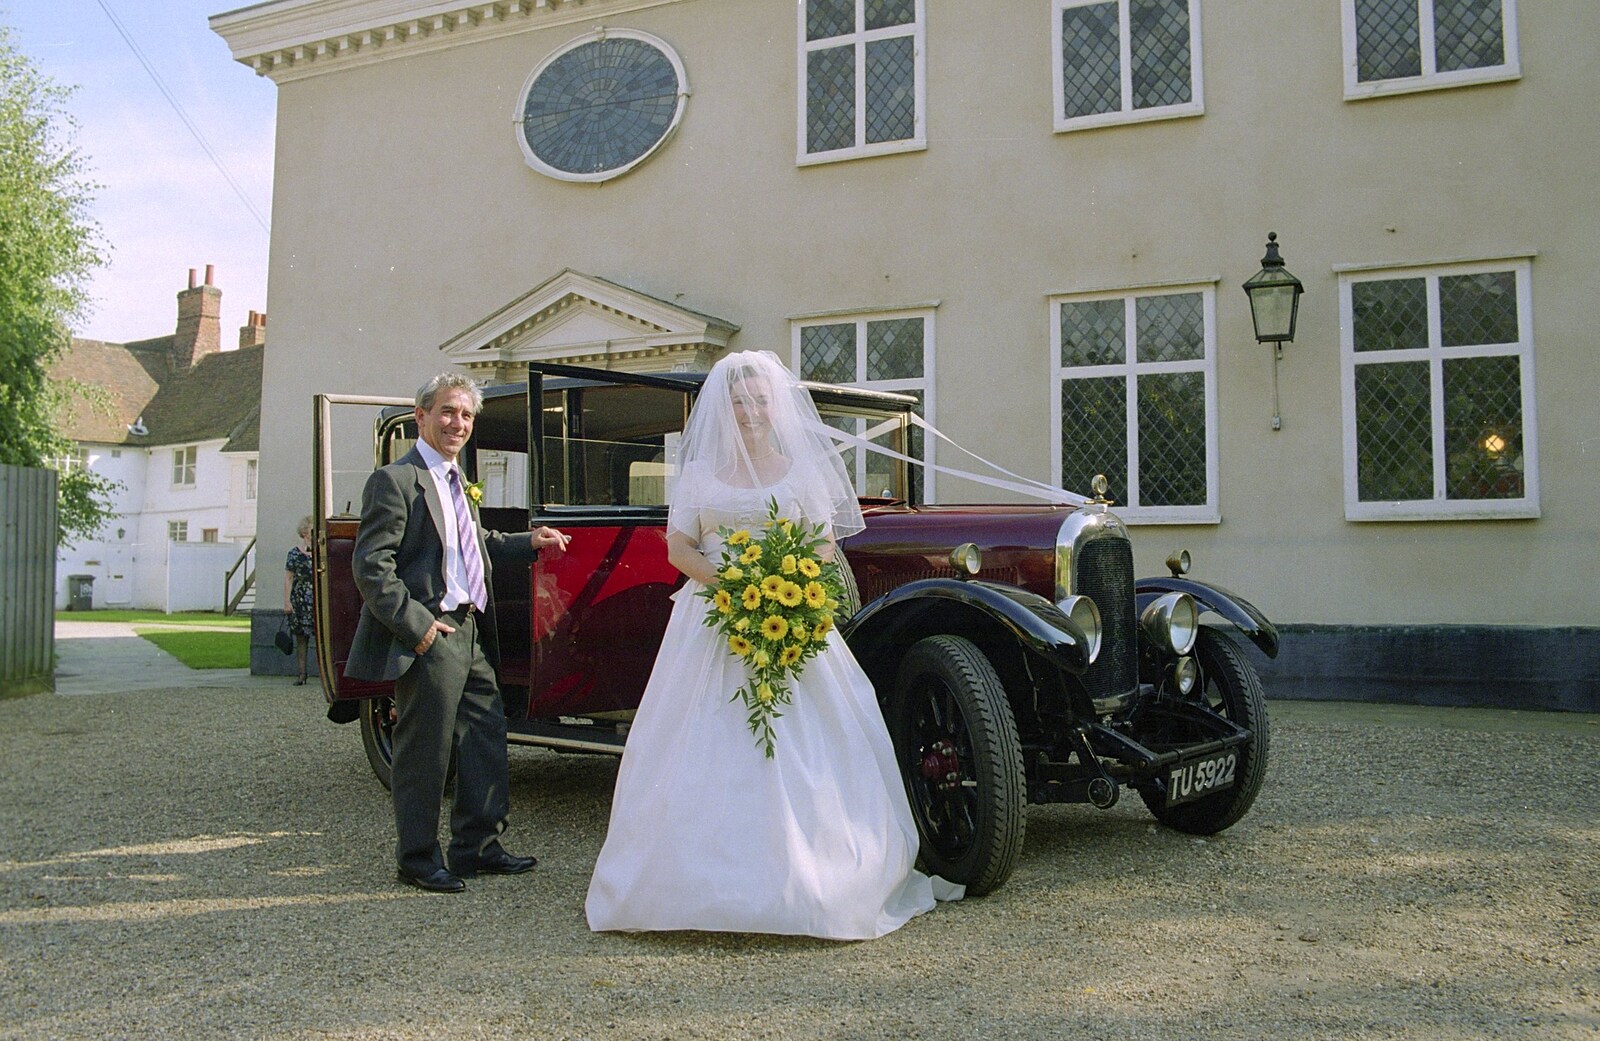 Lesley arrives from Joe and Lesley's CISU Wedding, Ipswich, Suffolk - 30th July 1998